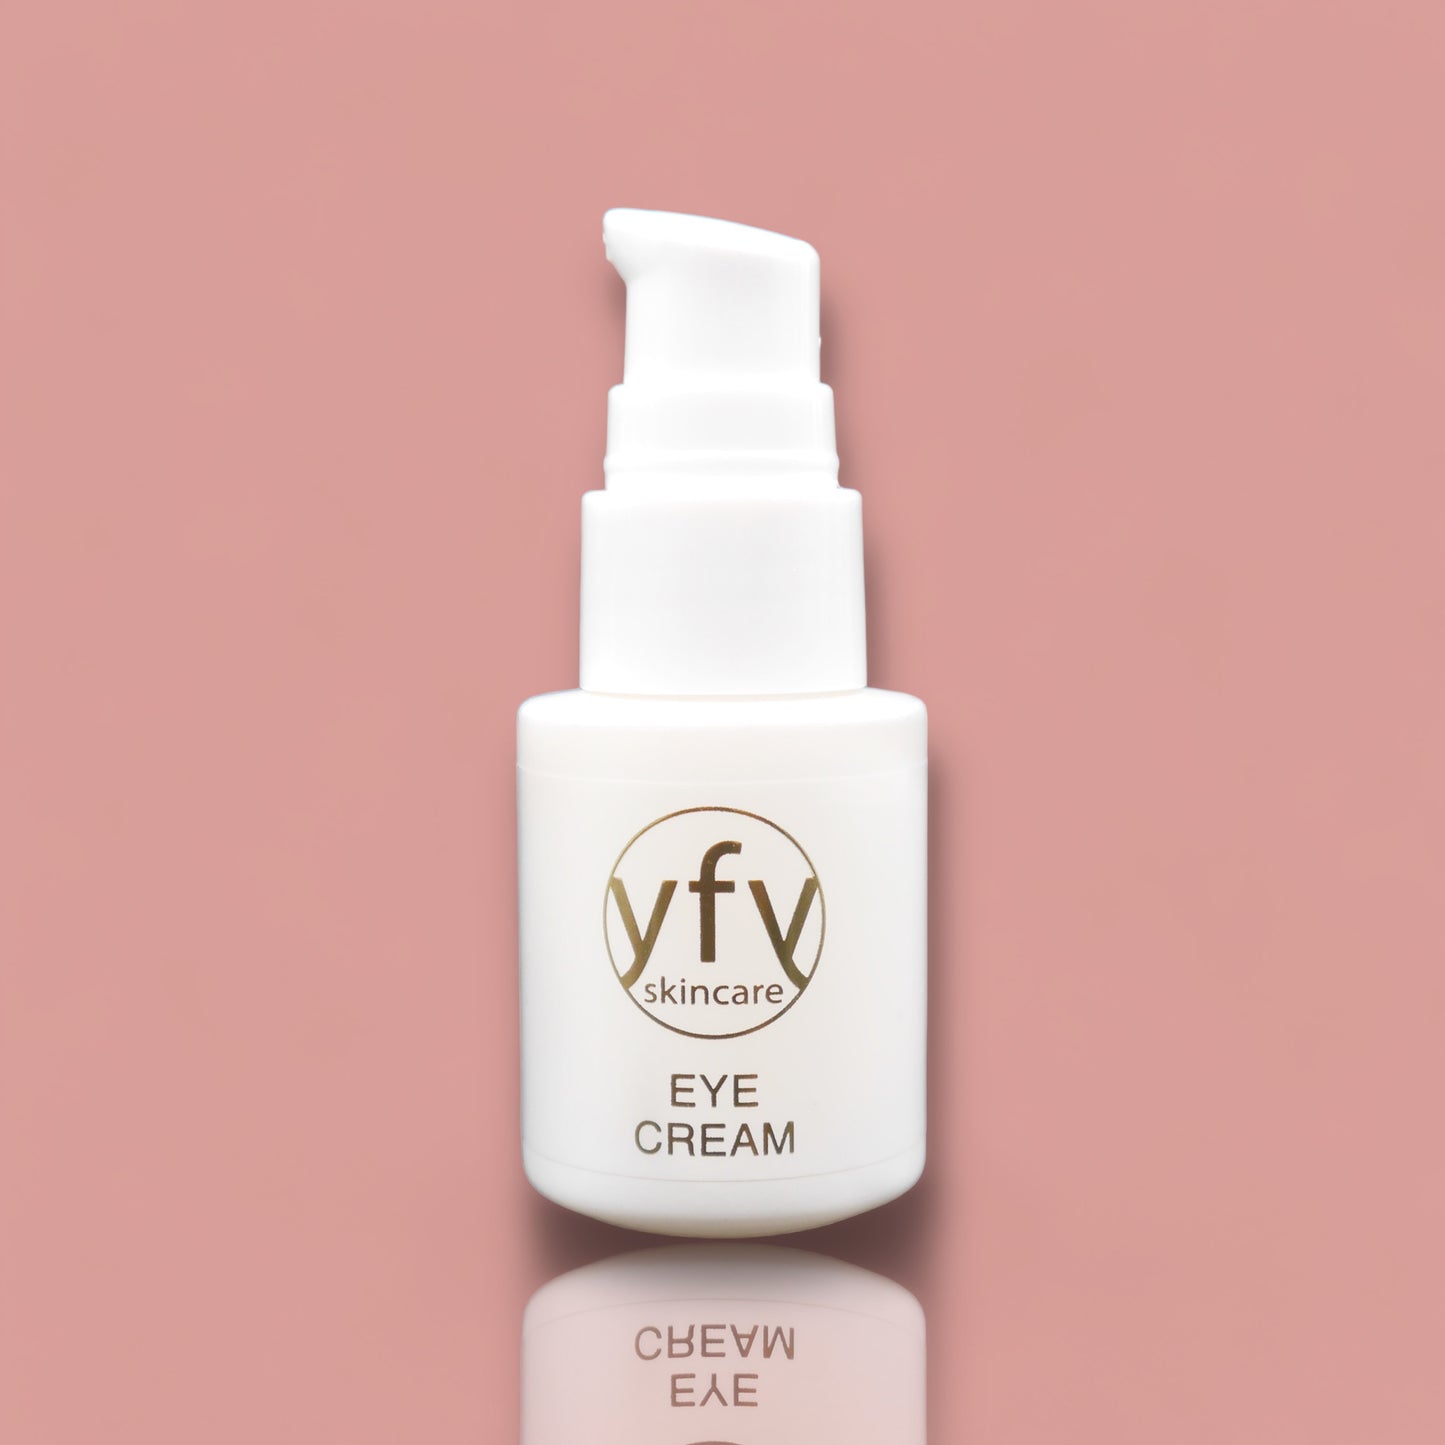 yfy skincare eye cream